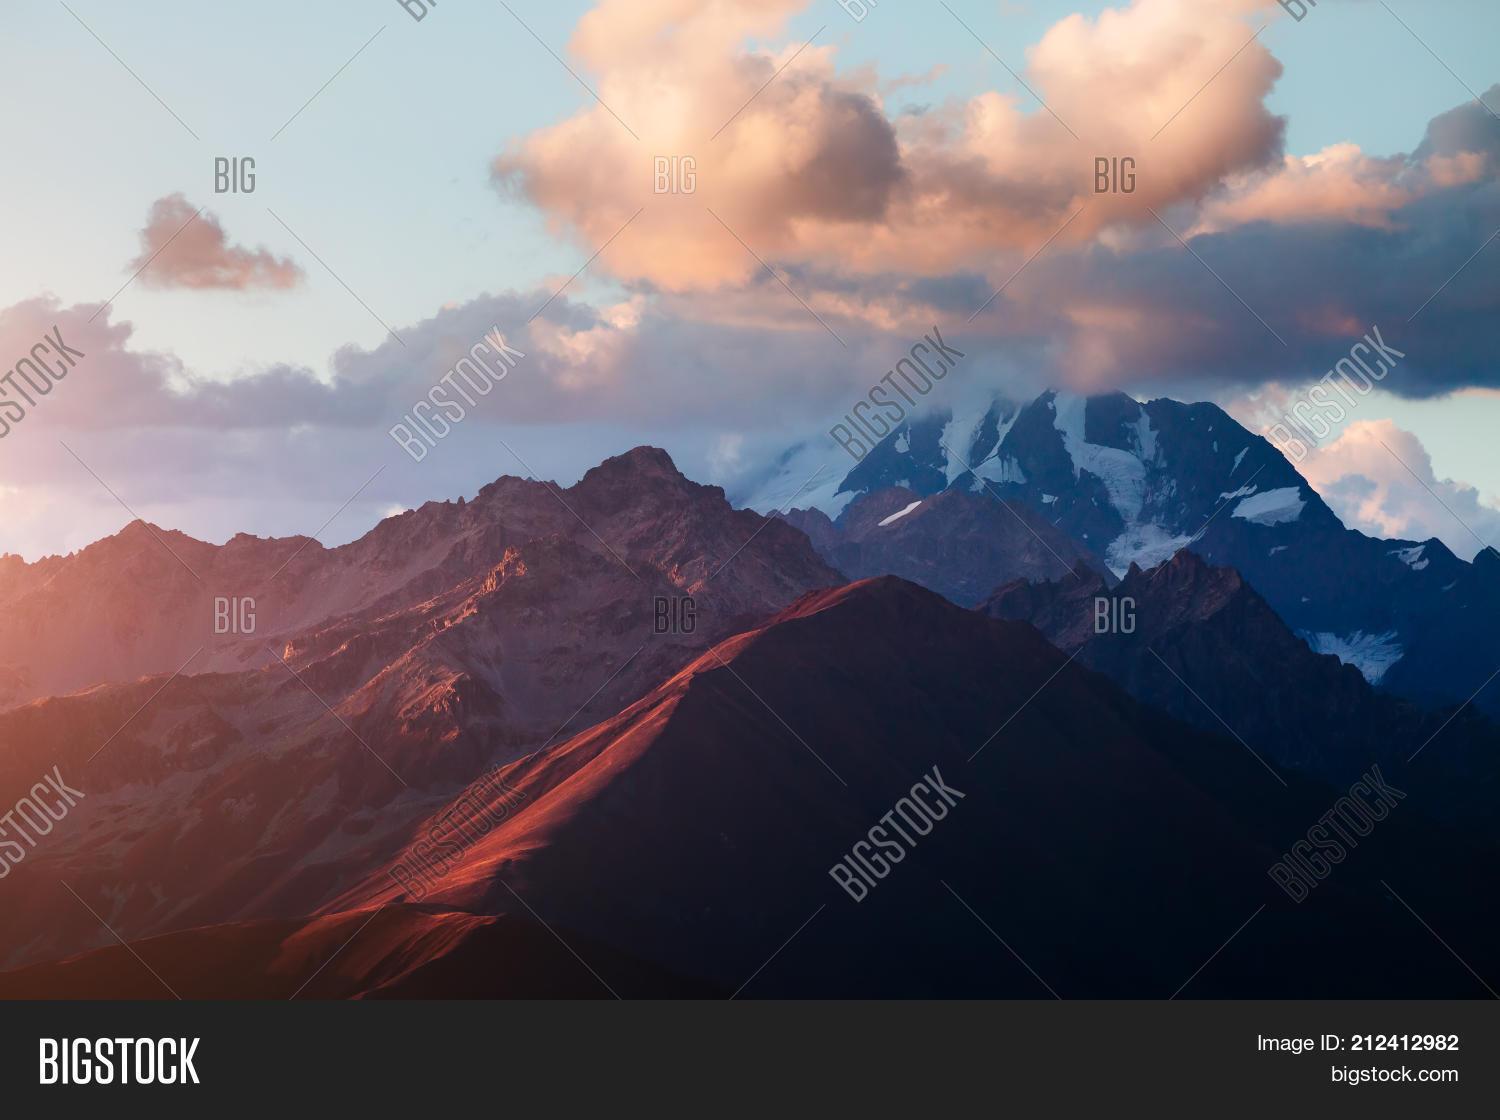 Look Grand Ridges Image & Photo (Free Trial)